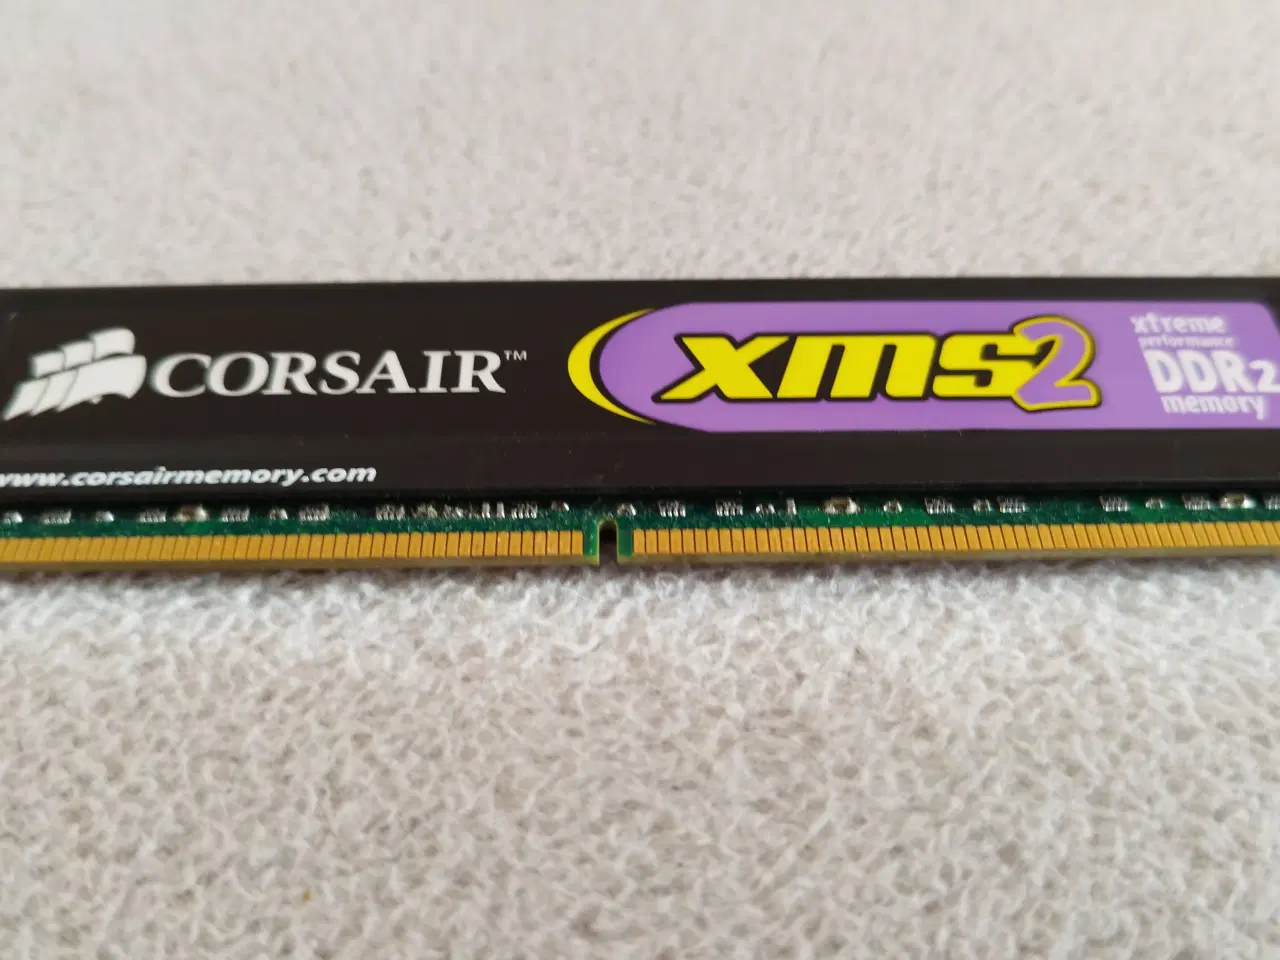 Billede 5 - 4 x 1 GB Corsair xms2 DDR2 Ram-blokke